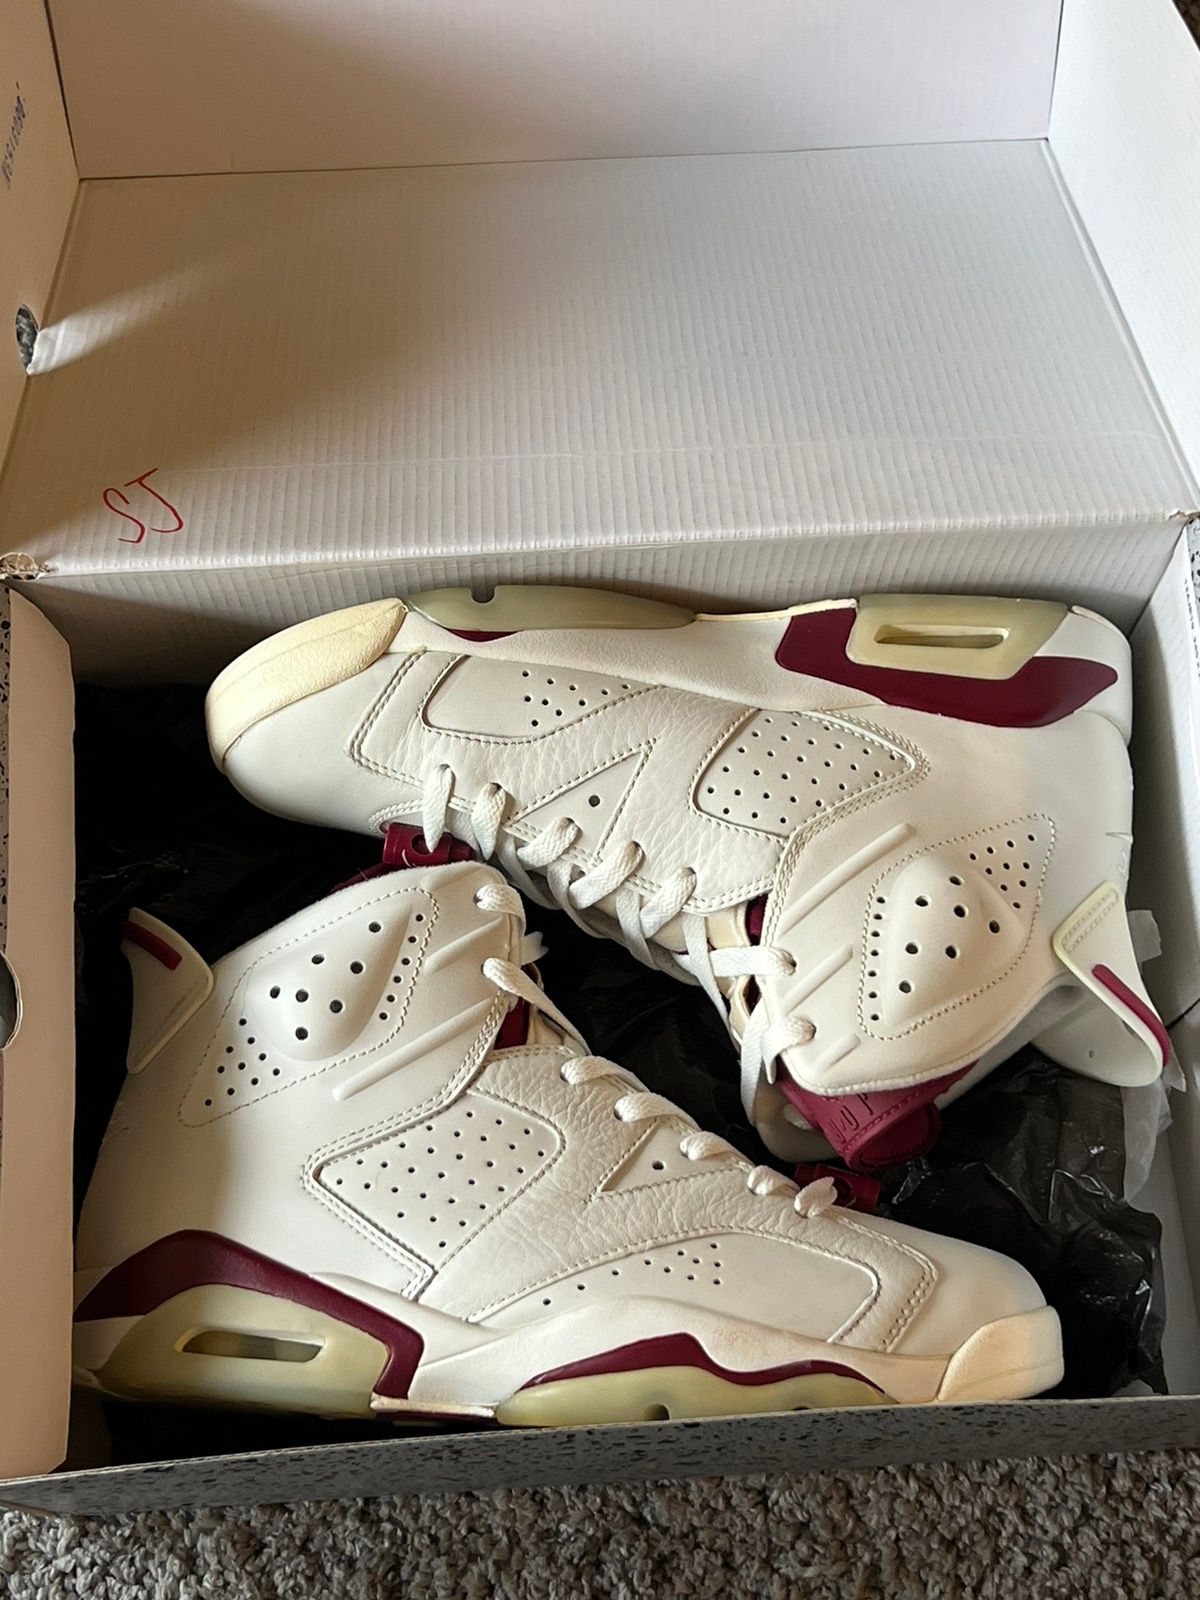 Pre-owned Jordan Brand Retro 6 “maroon” Size 8.5 Shoes In Beige